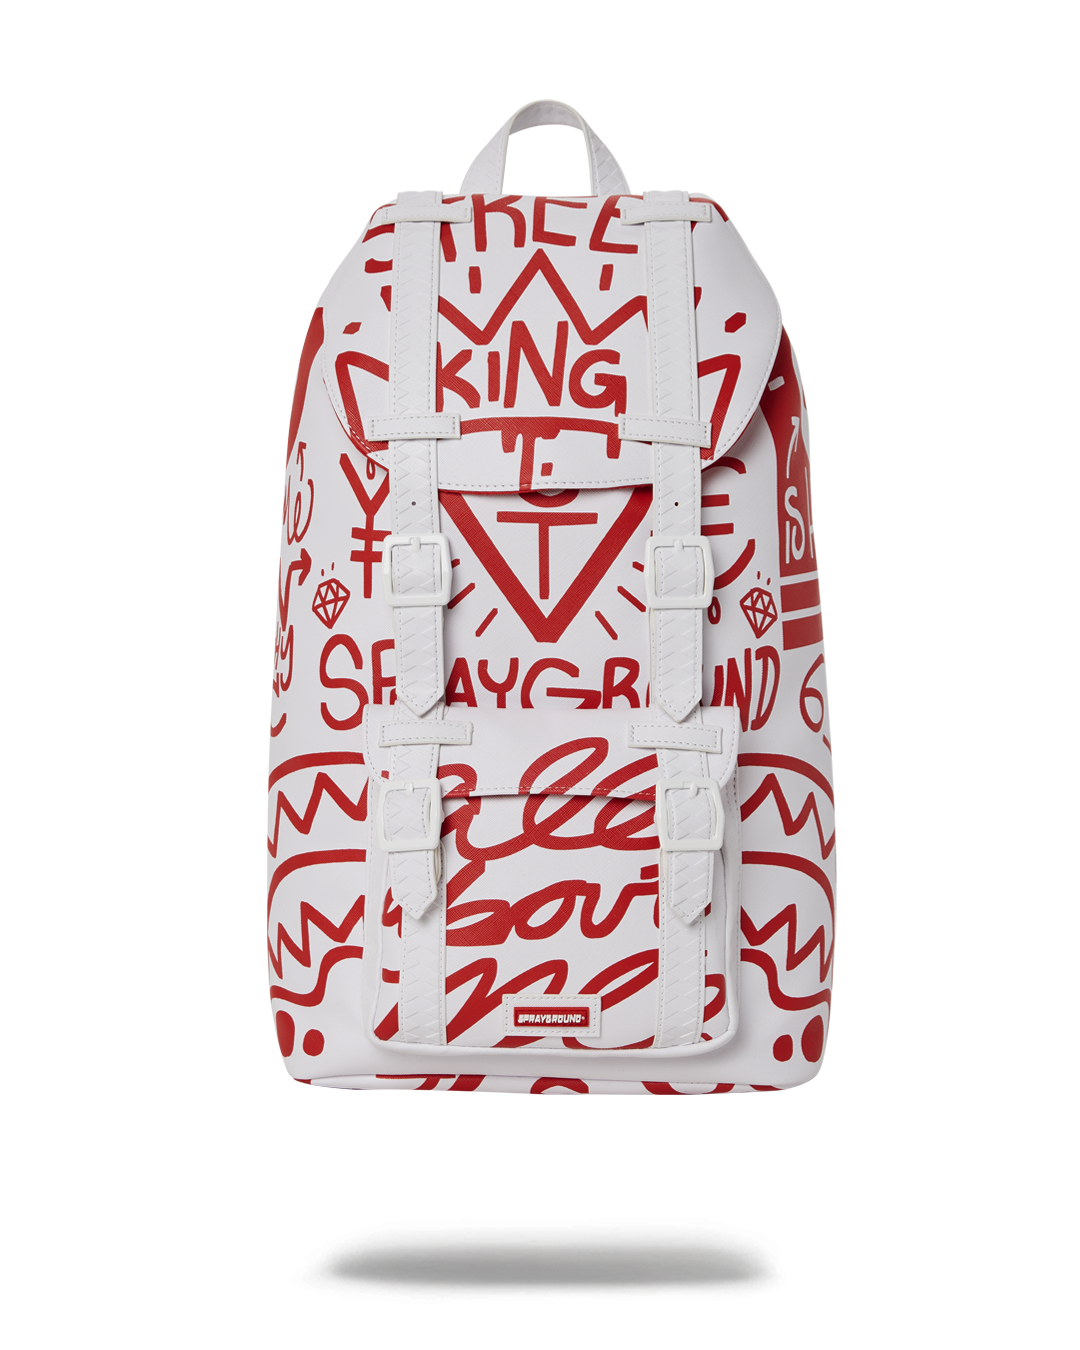 SPRAYGROUND: backpack for man - Red